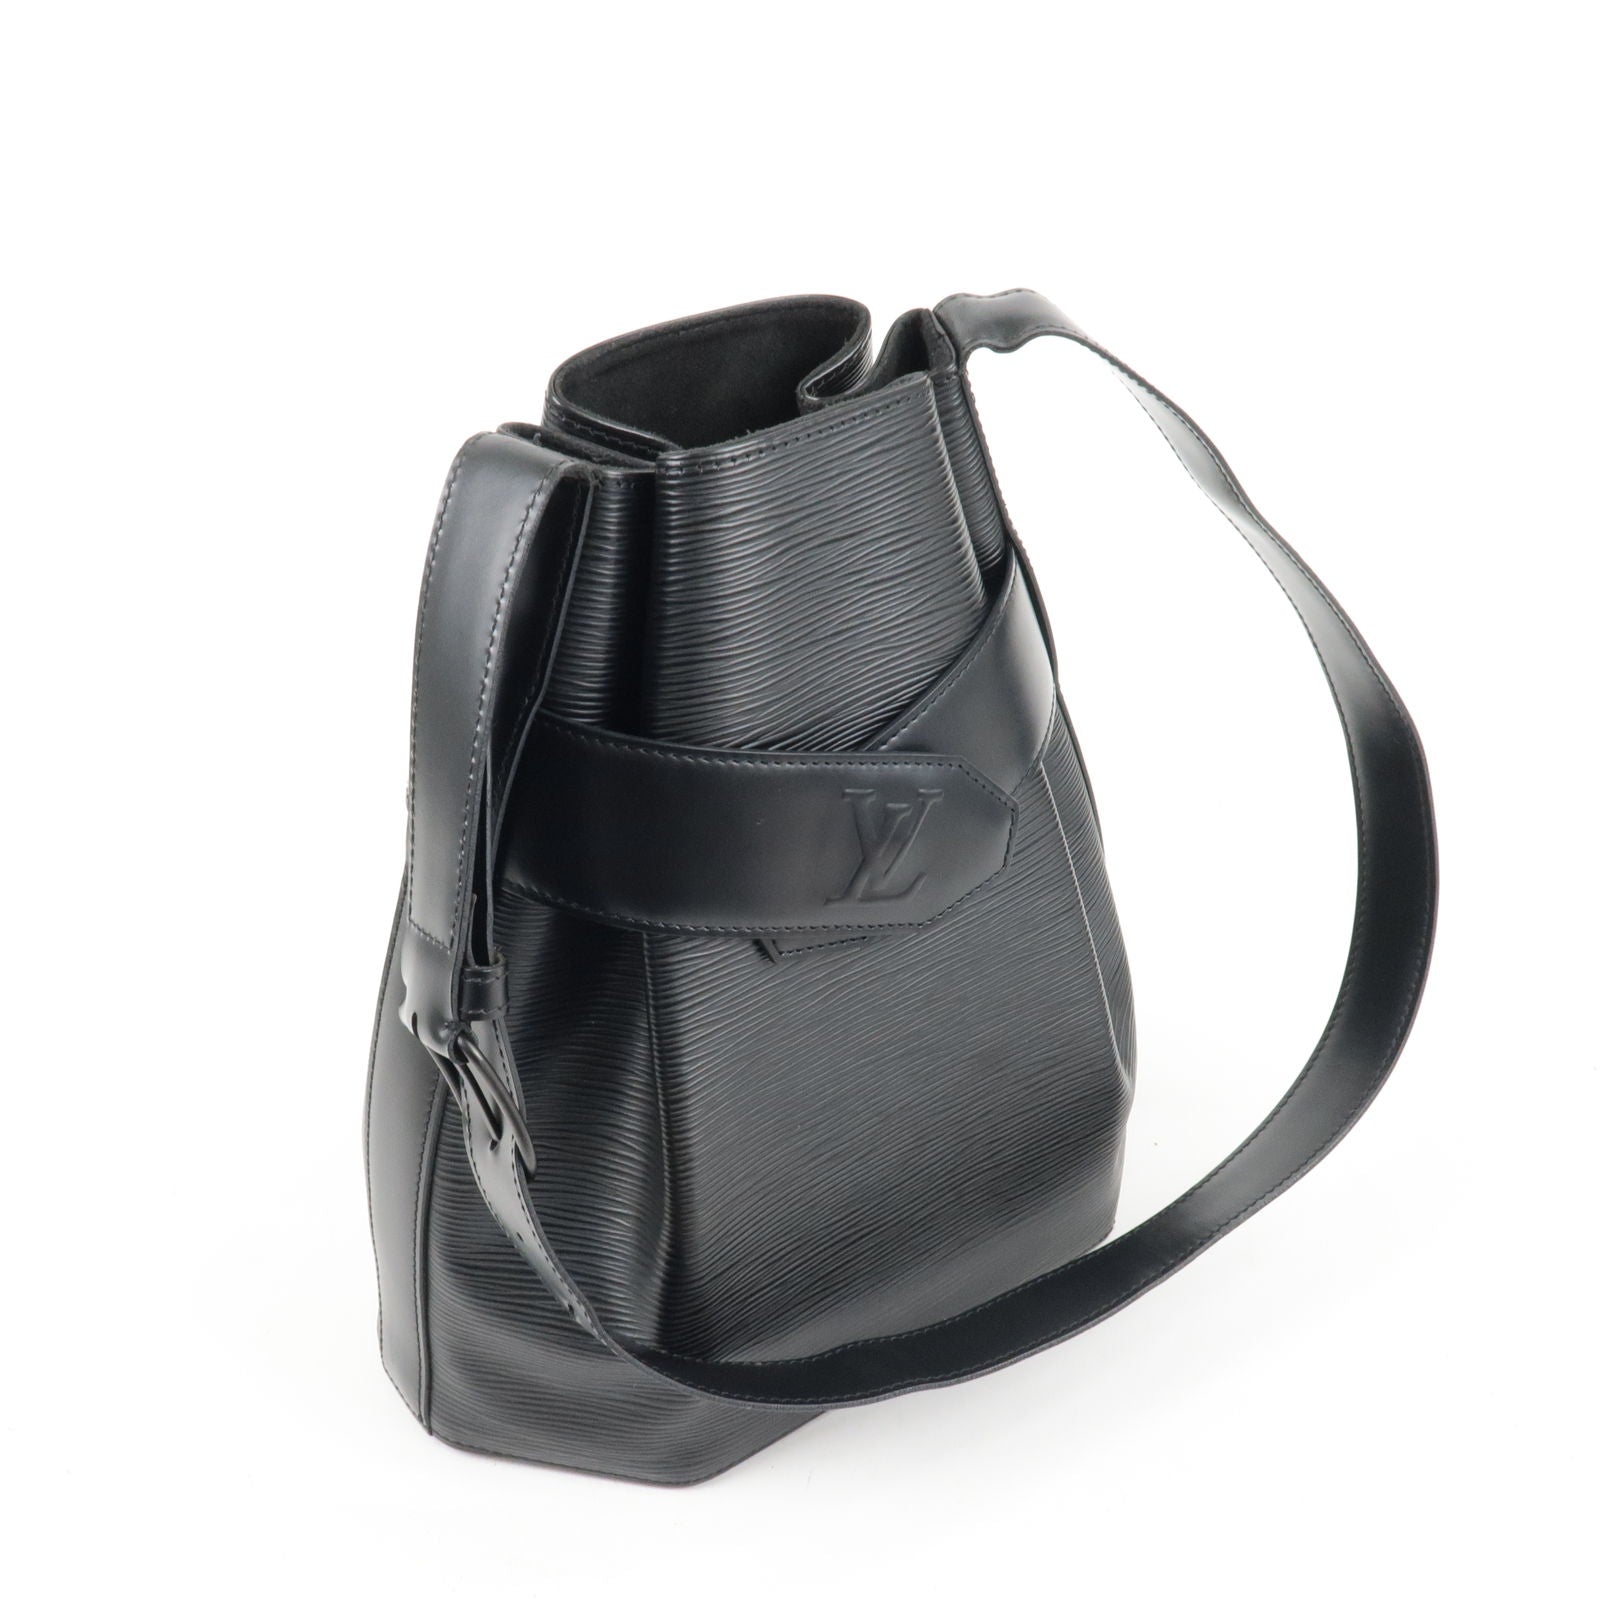 Bucket/Chapéu Louis Vuitton premium Exclusivo